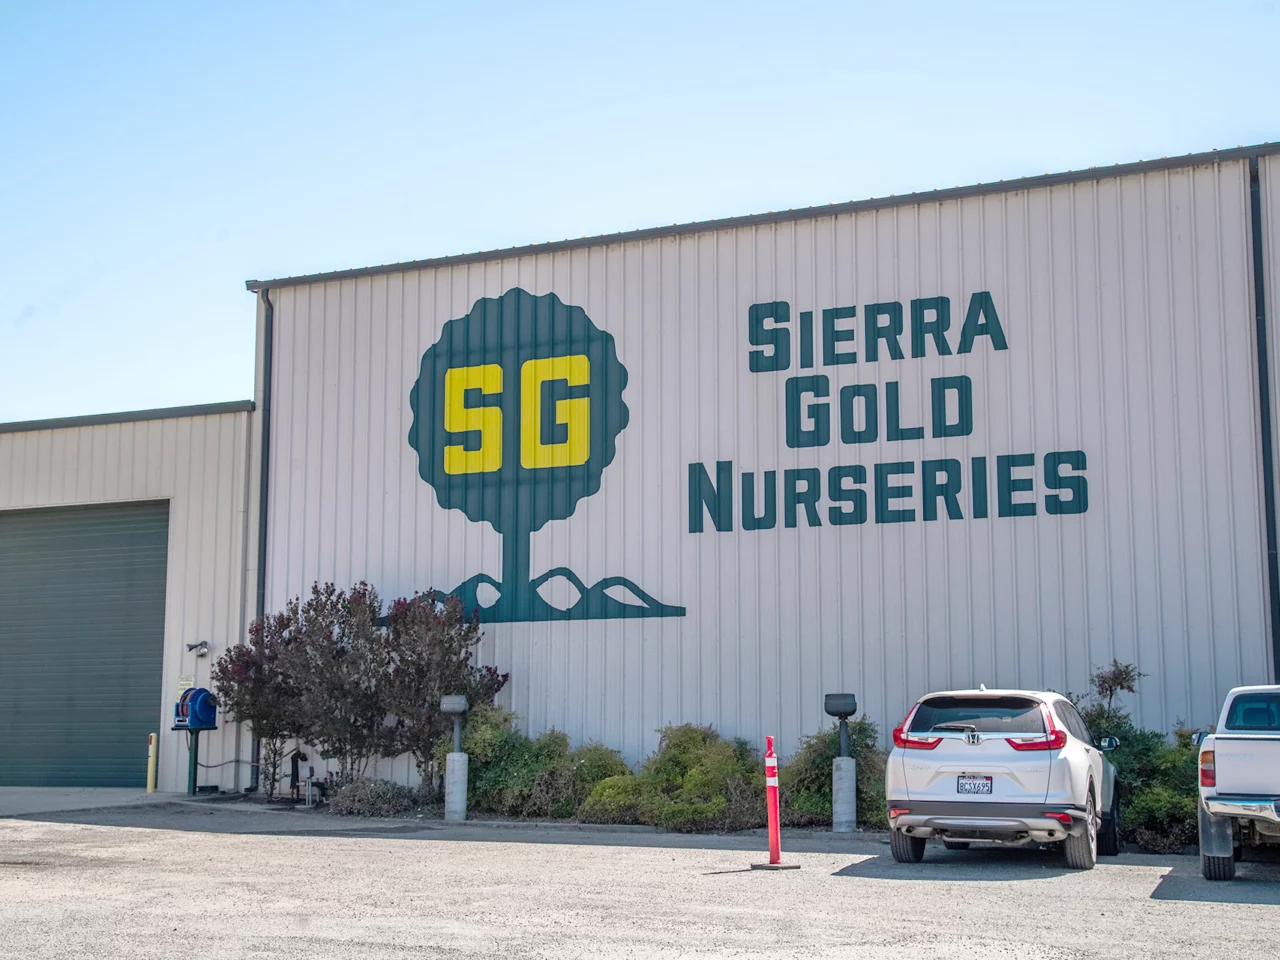 sierra gold nurseries in yuba city, california